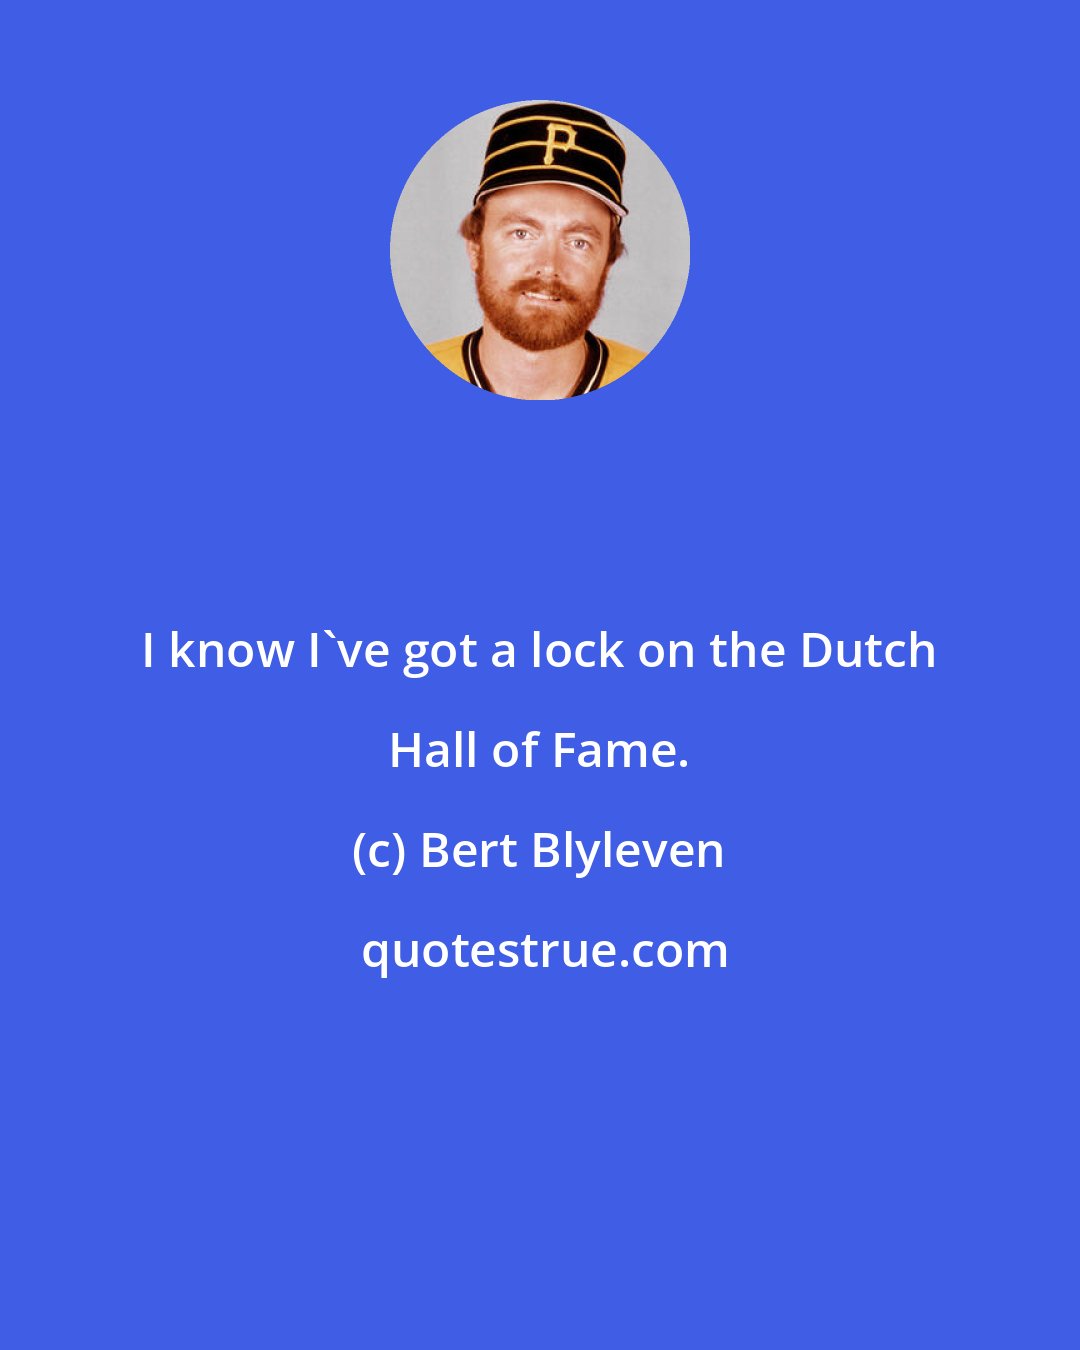 Bert Blyleven: I know I've got a lock on the Dutch Hall of Fame.